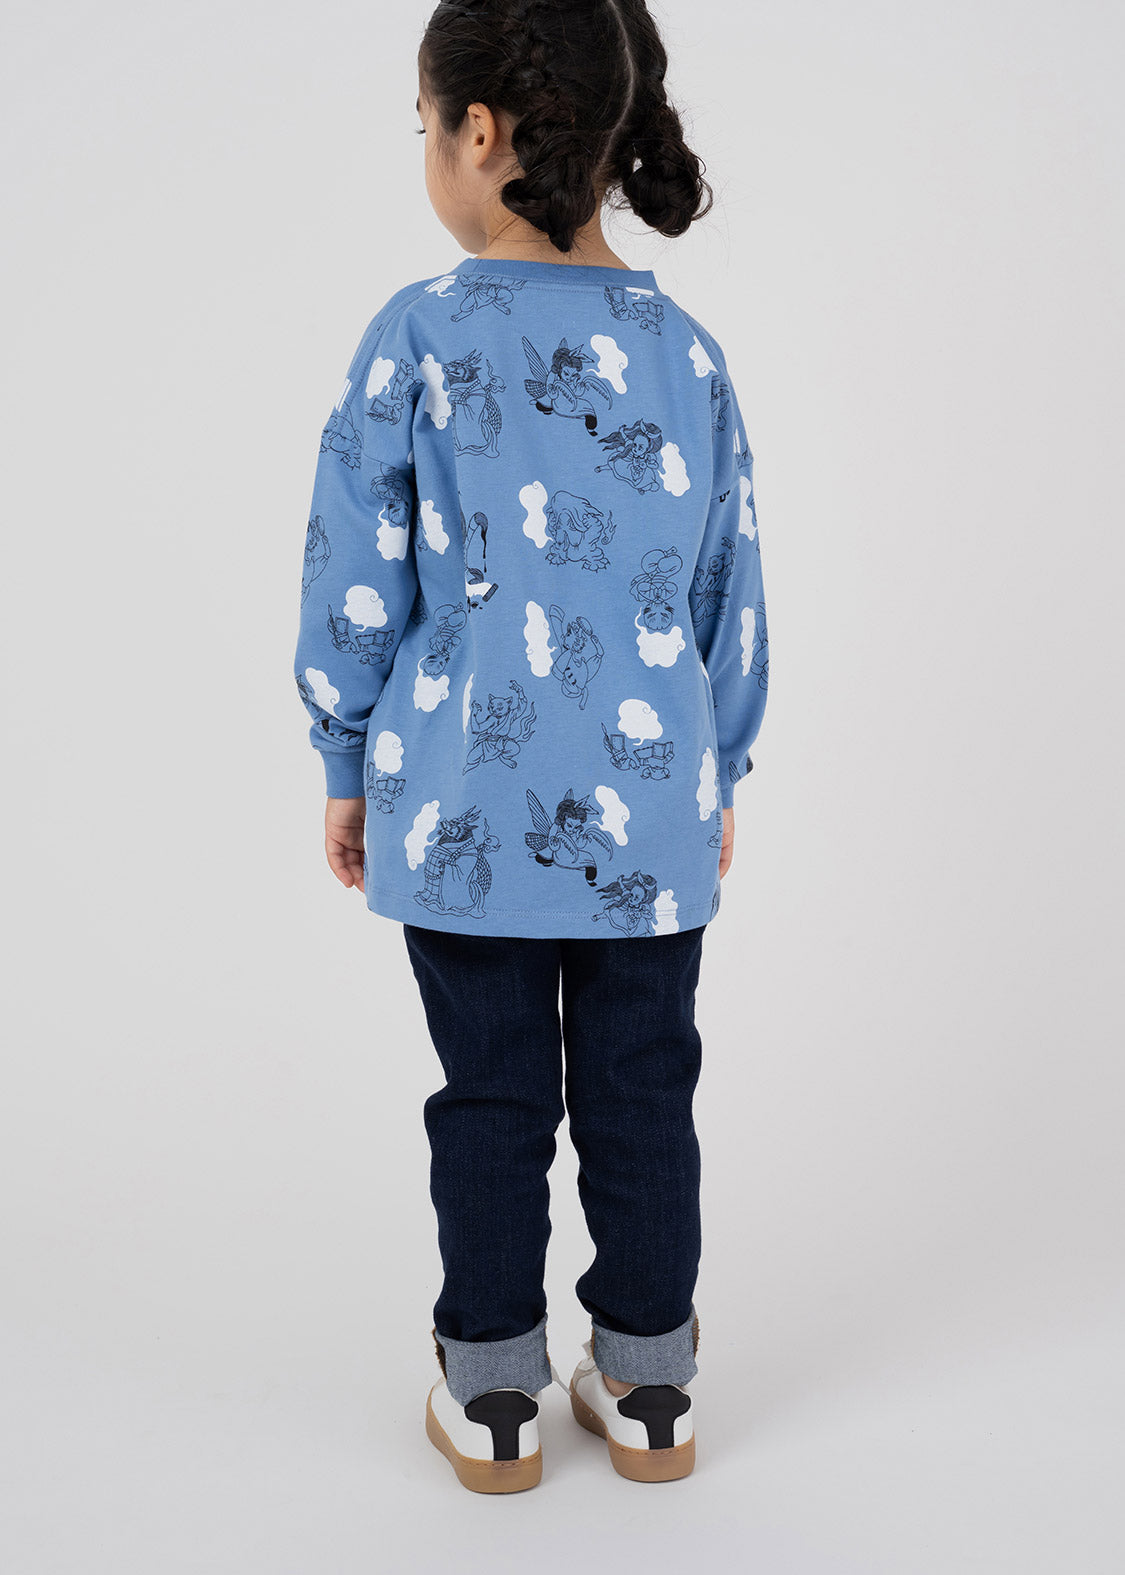 Ayako Ishiguro Drop Shoulder Long Sleeve Tee (Ayako Ishiguro_Contents Pattern) - Kids